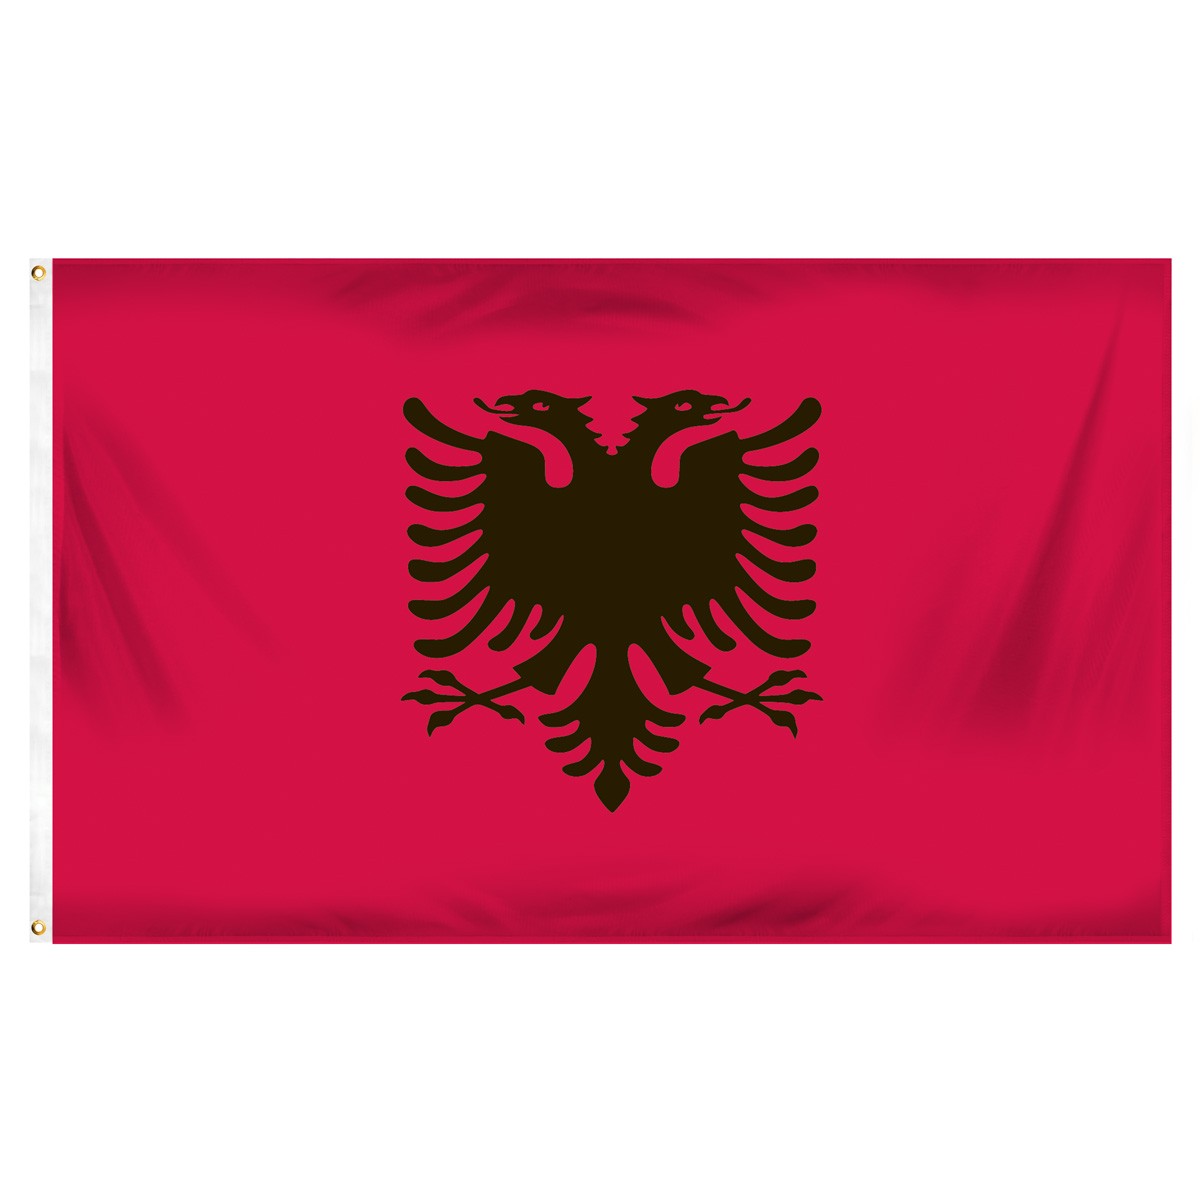 Albania Executive Flags